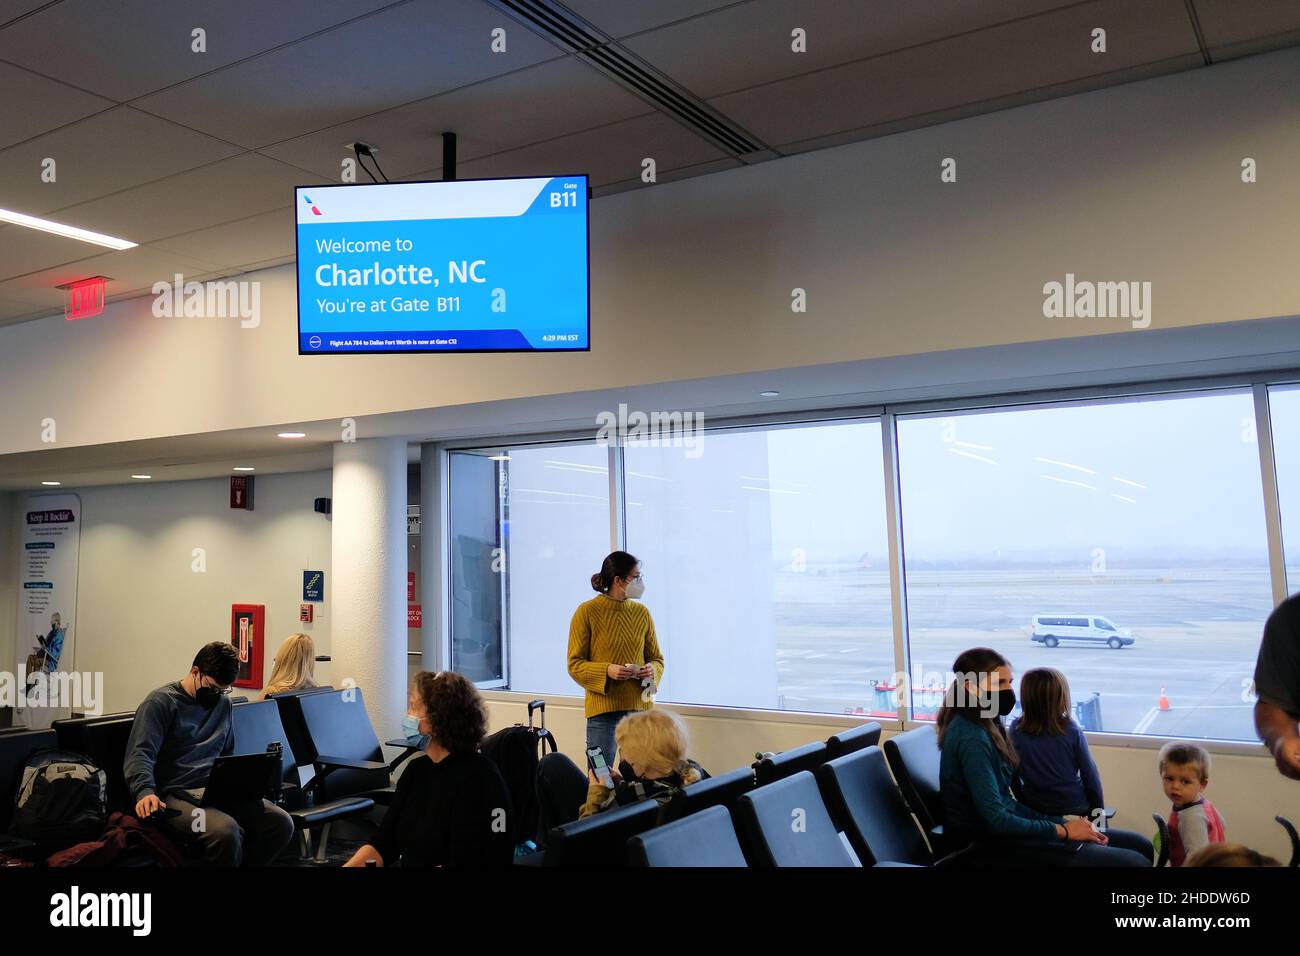 Information monitor at Gate B11 in Charlotte Douglass International Airport welcoming passengers to Charlotte, North Carolina, USA. Stock Photo